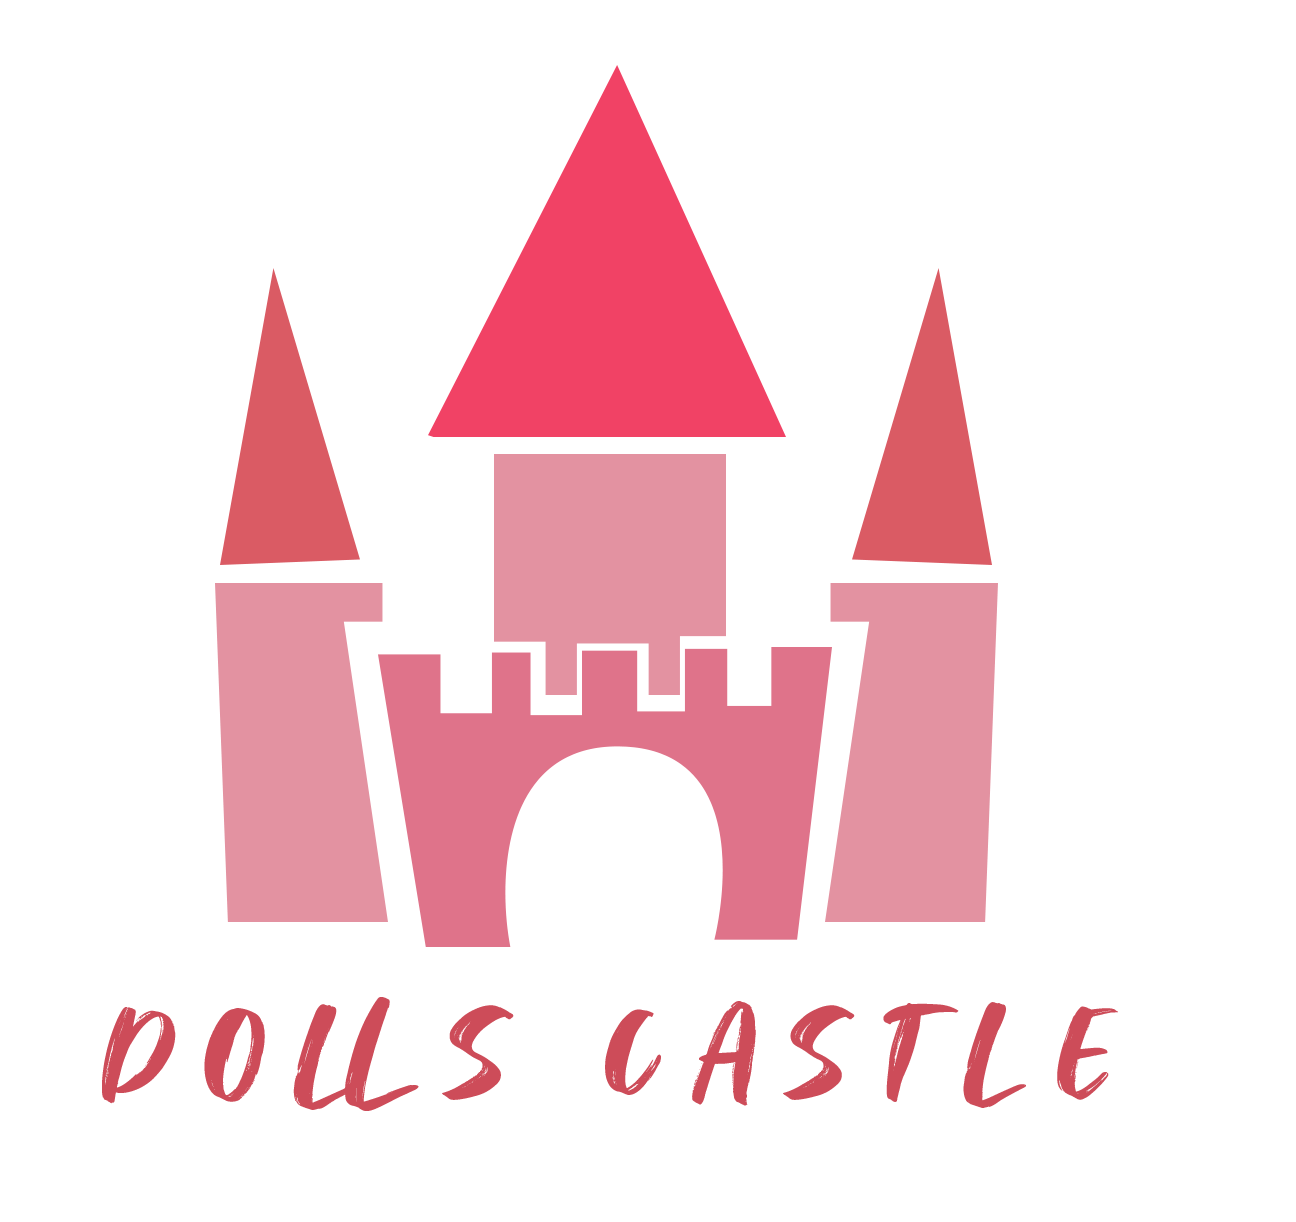 DOLLS CASTLE